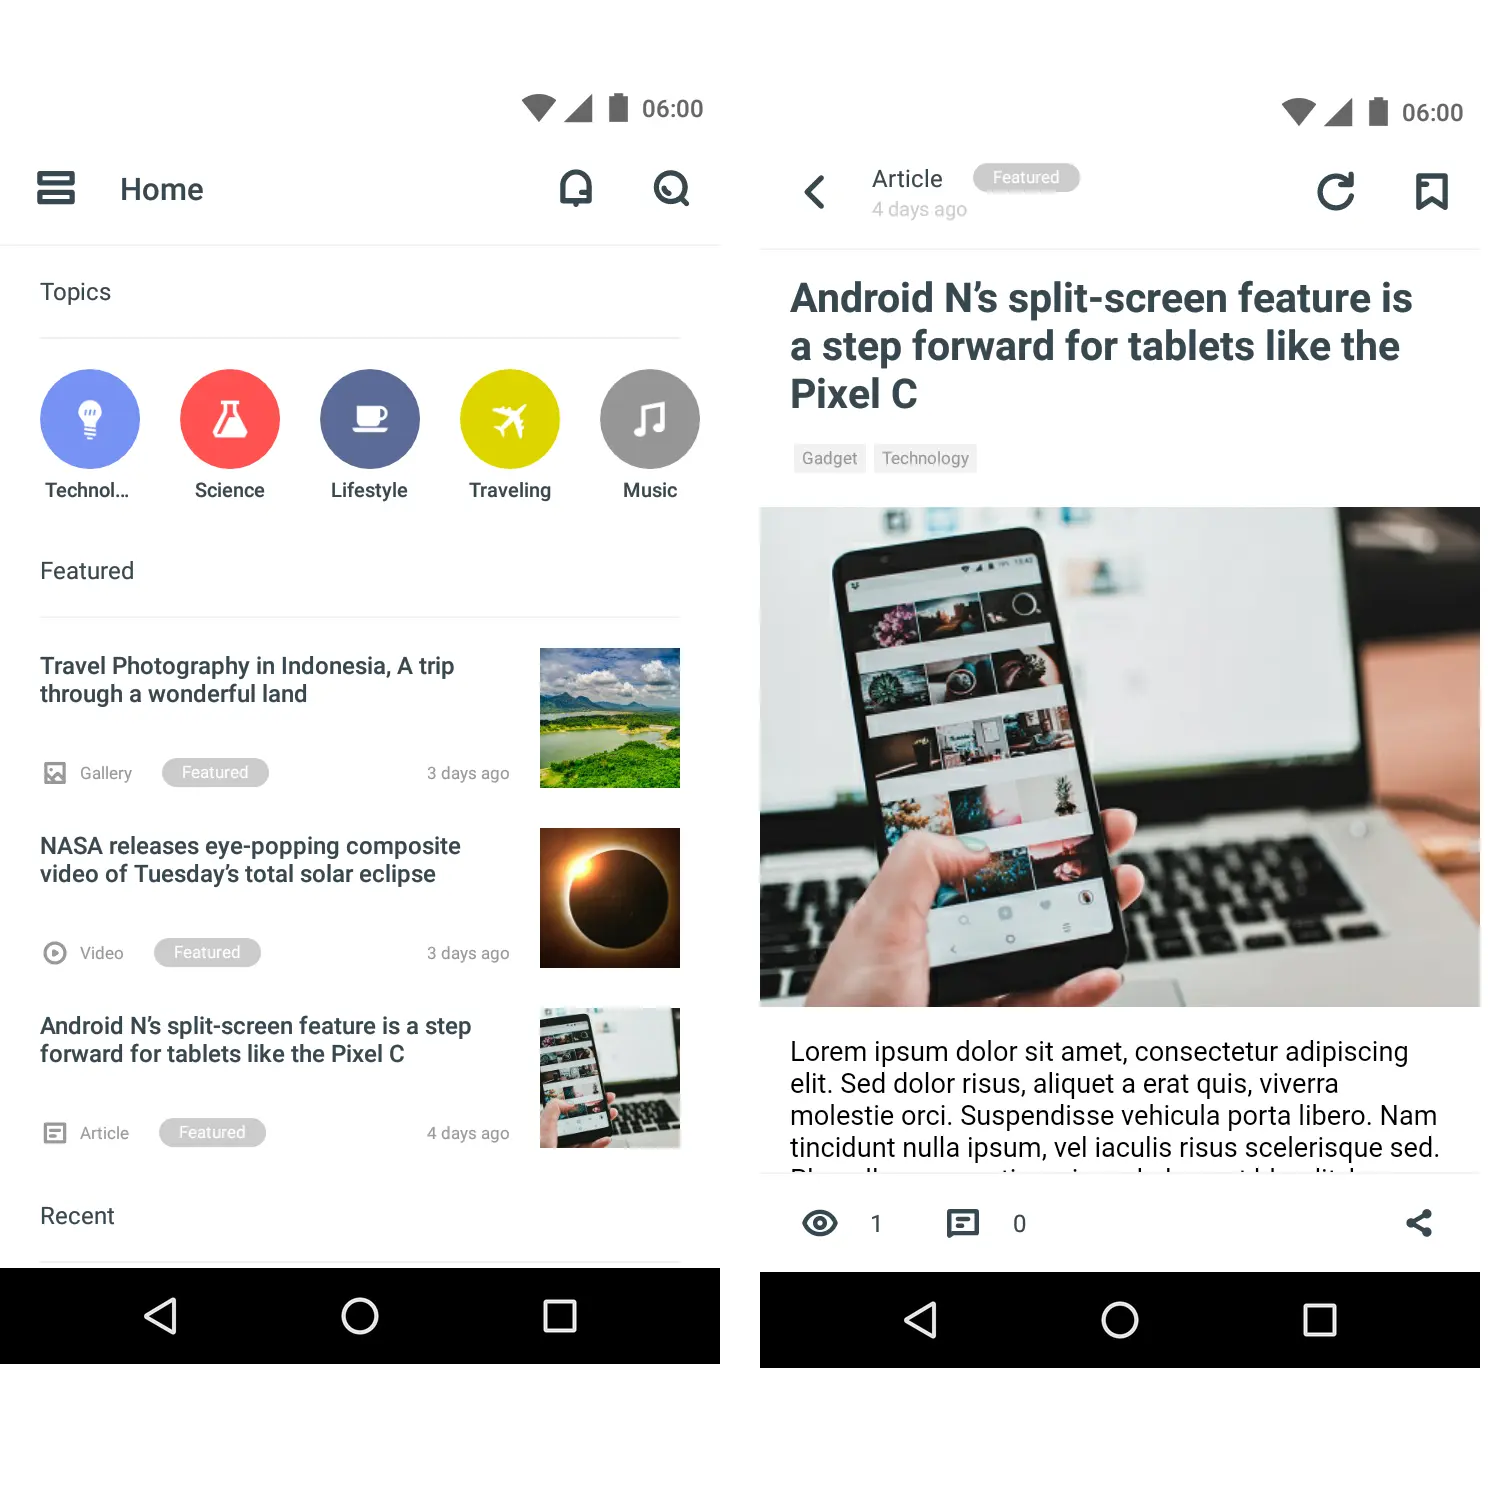 Android News Anwendung iPhone & Android App Entwicklungs unternehmen In Indien | Online-Anwendung